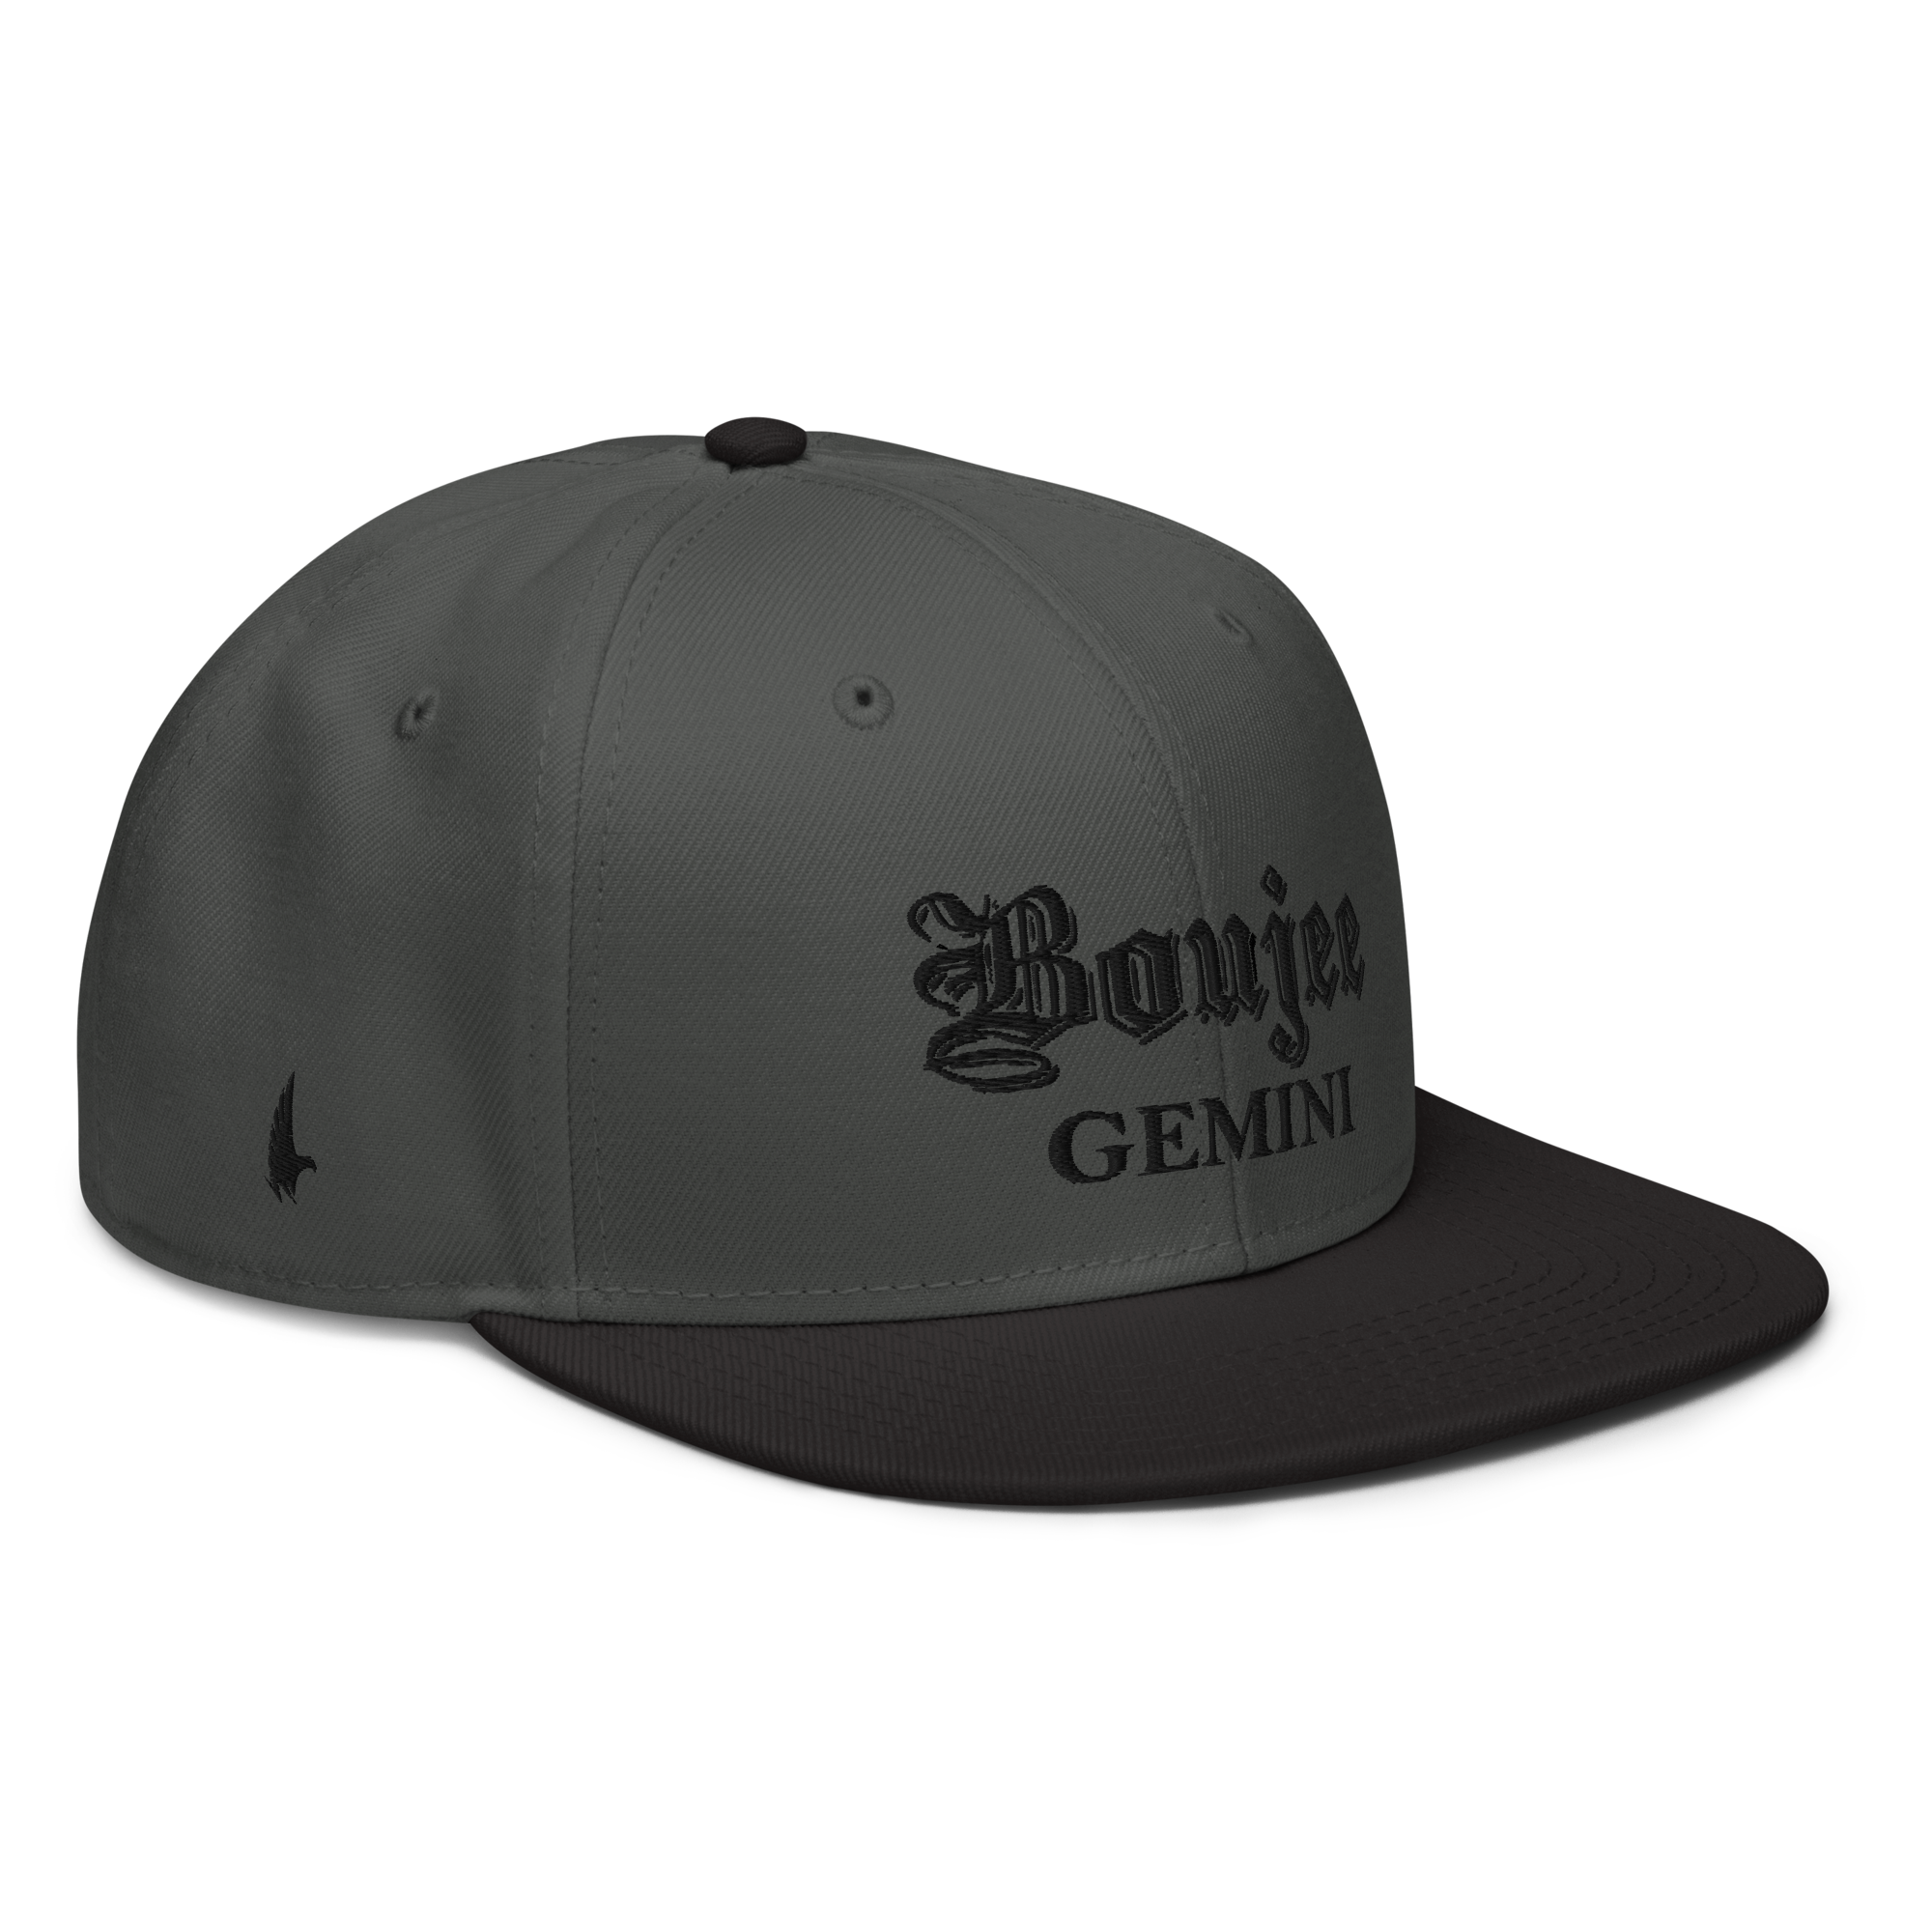 Boujee Gemini Snapback Hat - Charcoal Gray/Black/Black - Loyalty Vibes